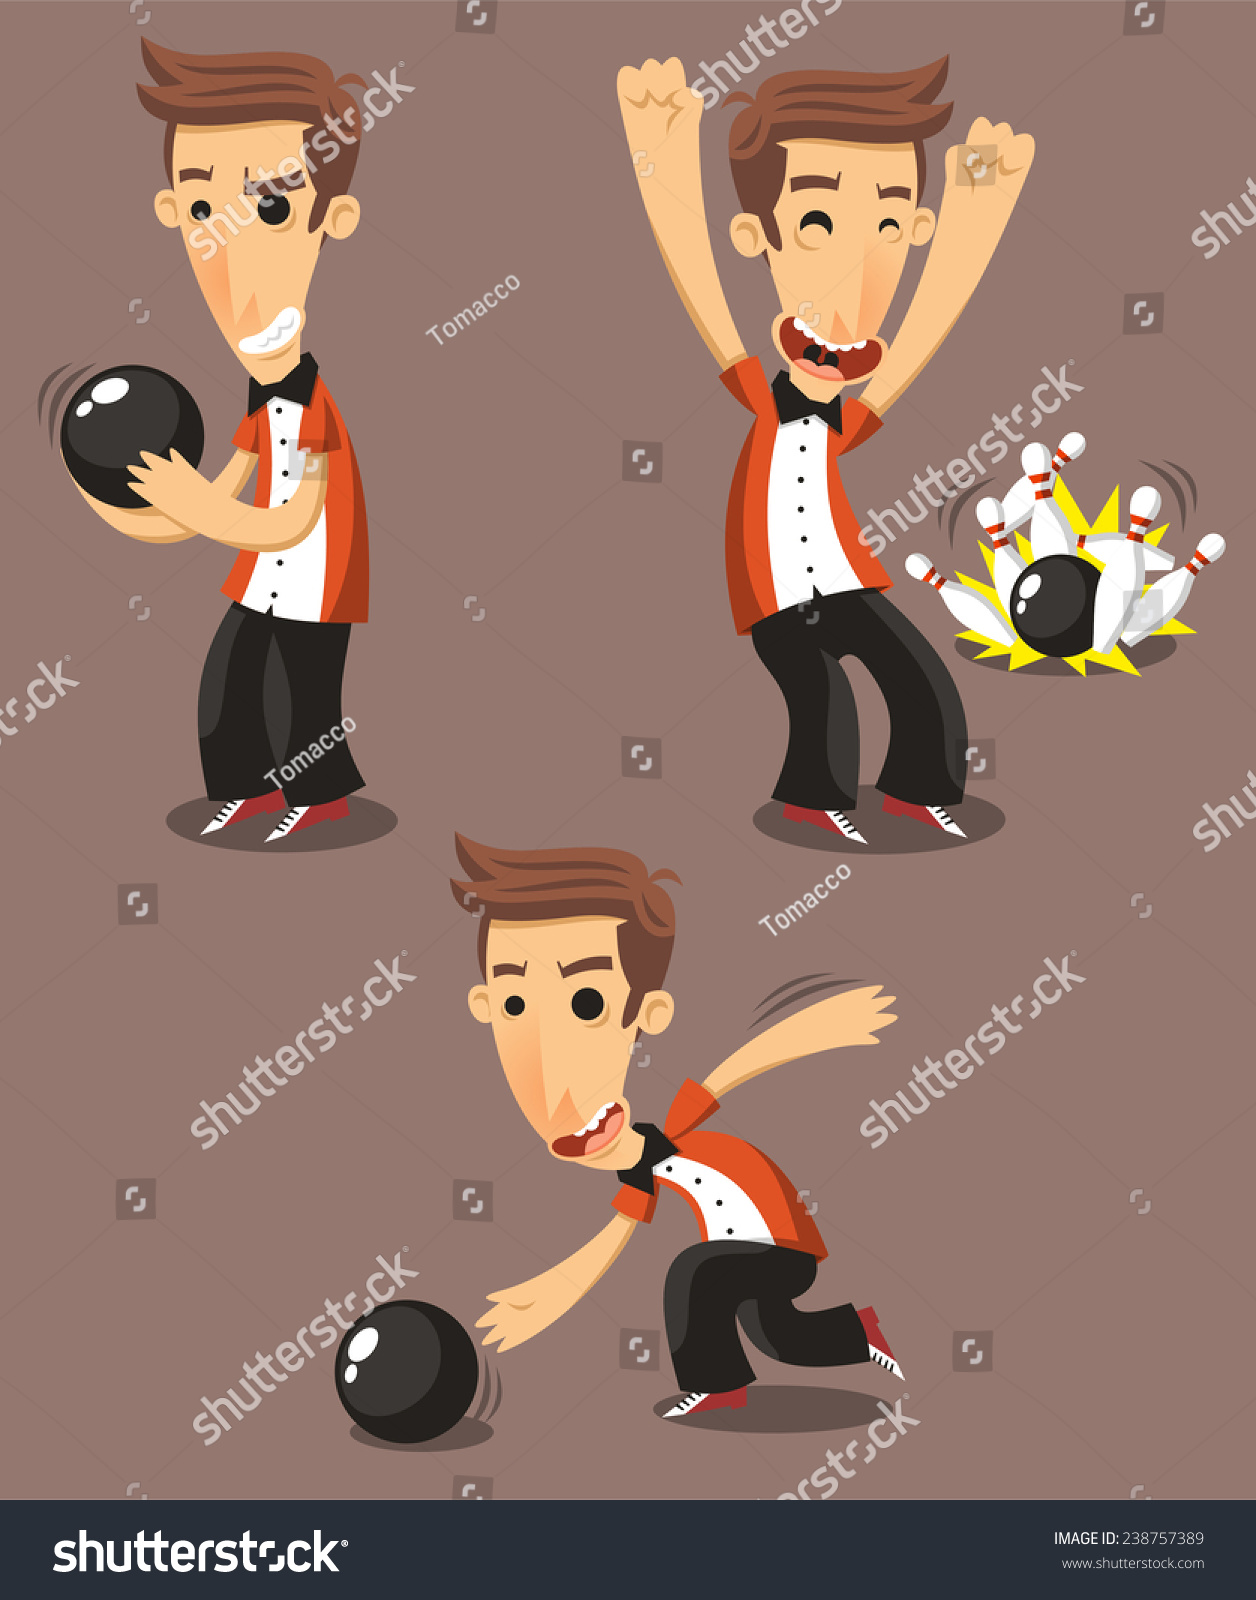 Edit Vectors Free Online - Bowler bowling | Shutterstock Editor